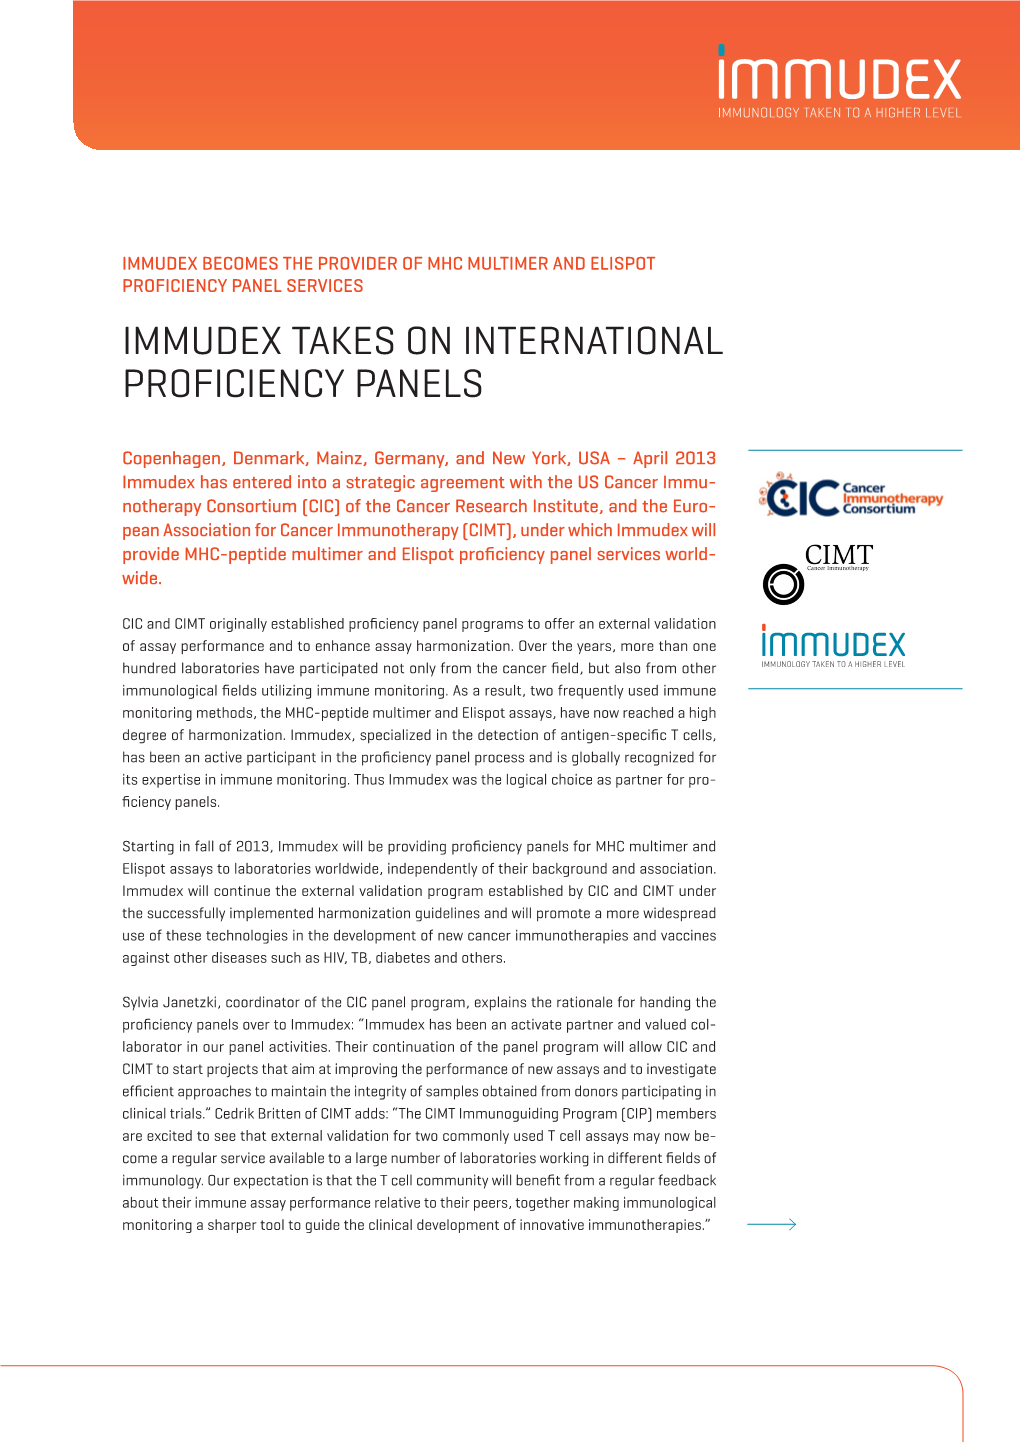 Immudex Takes on International Proficiency Panels